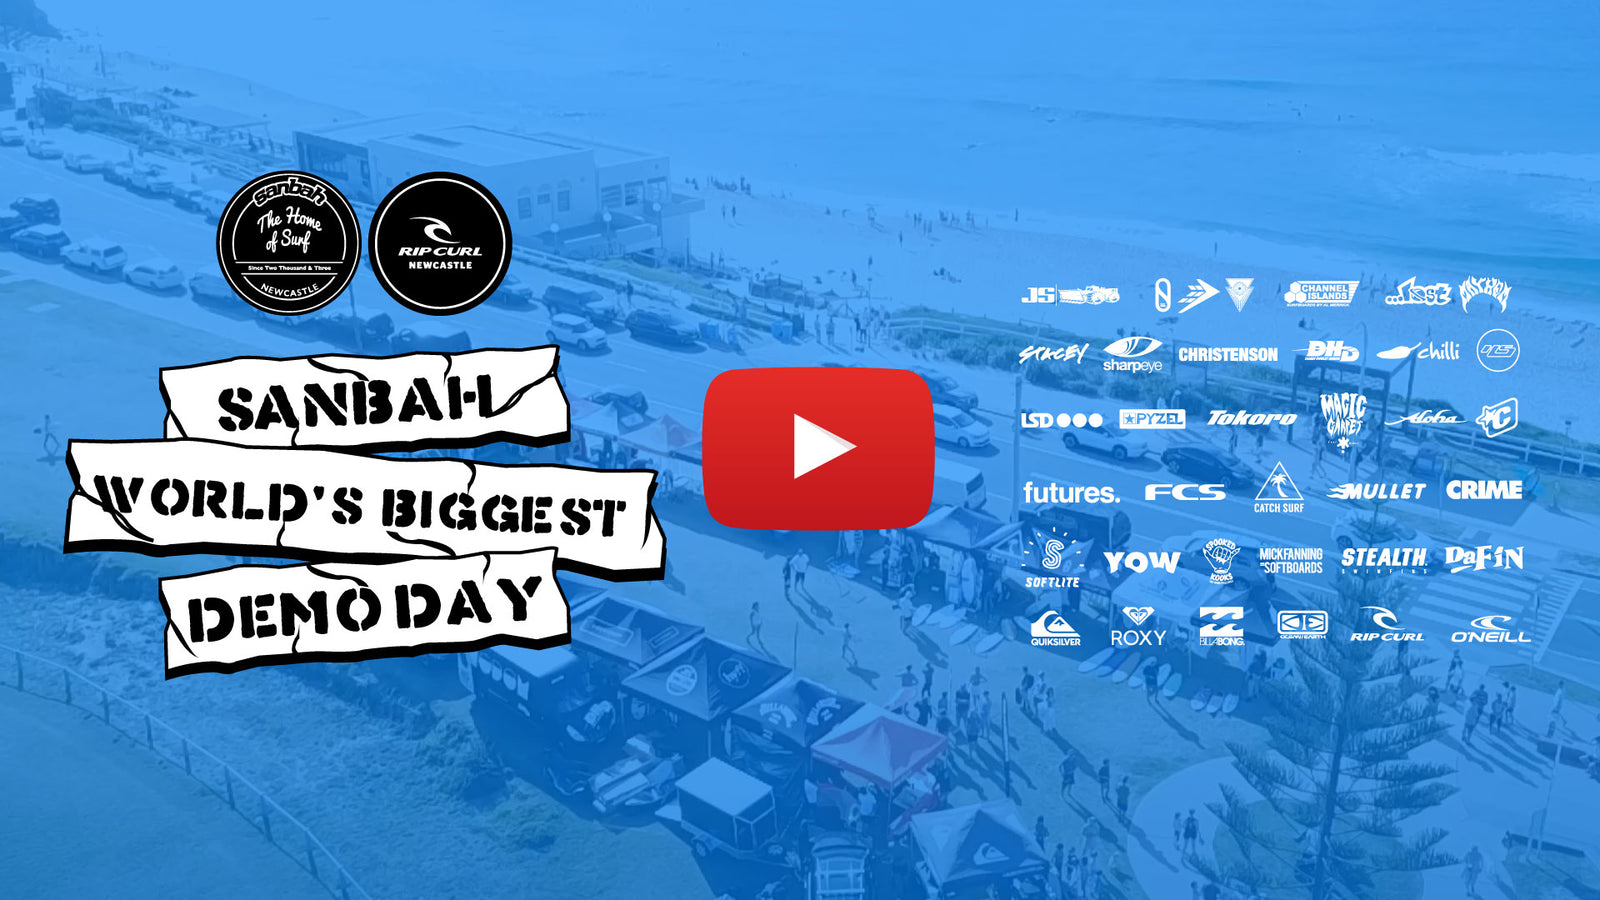 Wrap up Video - 2022 Sanbah Worlds Biggest Surfboard Demo Day!